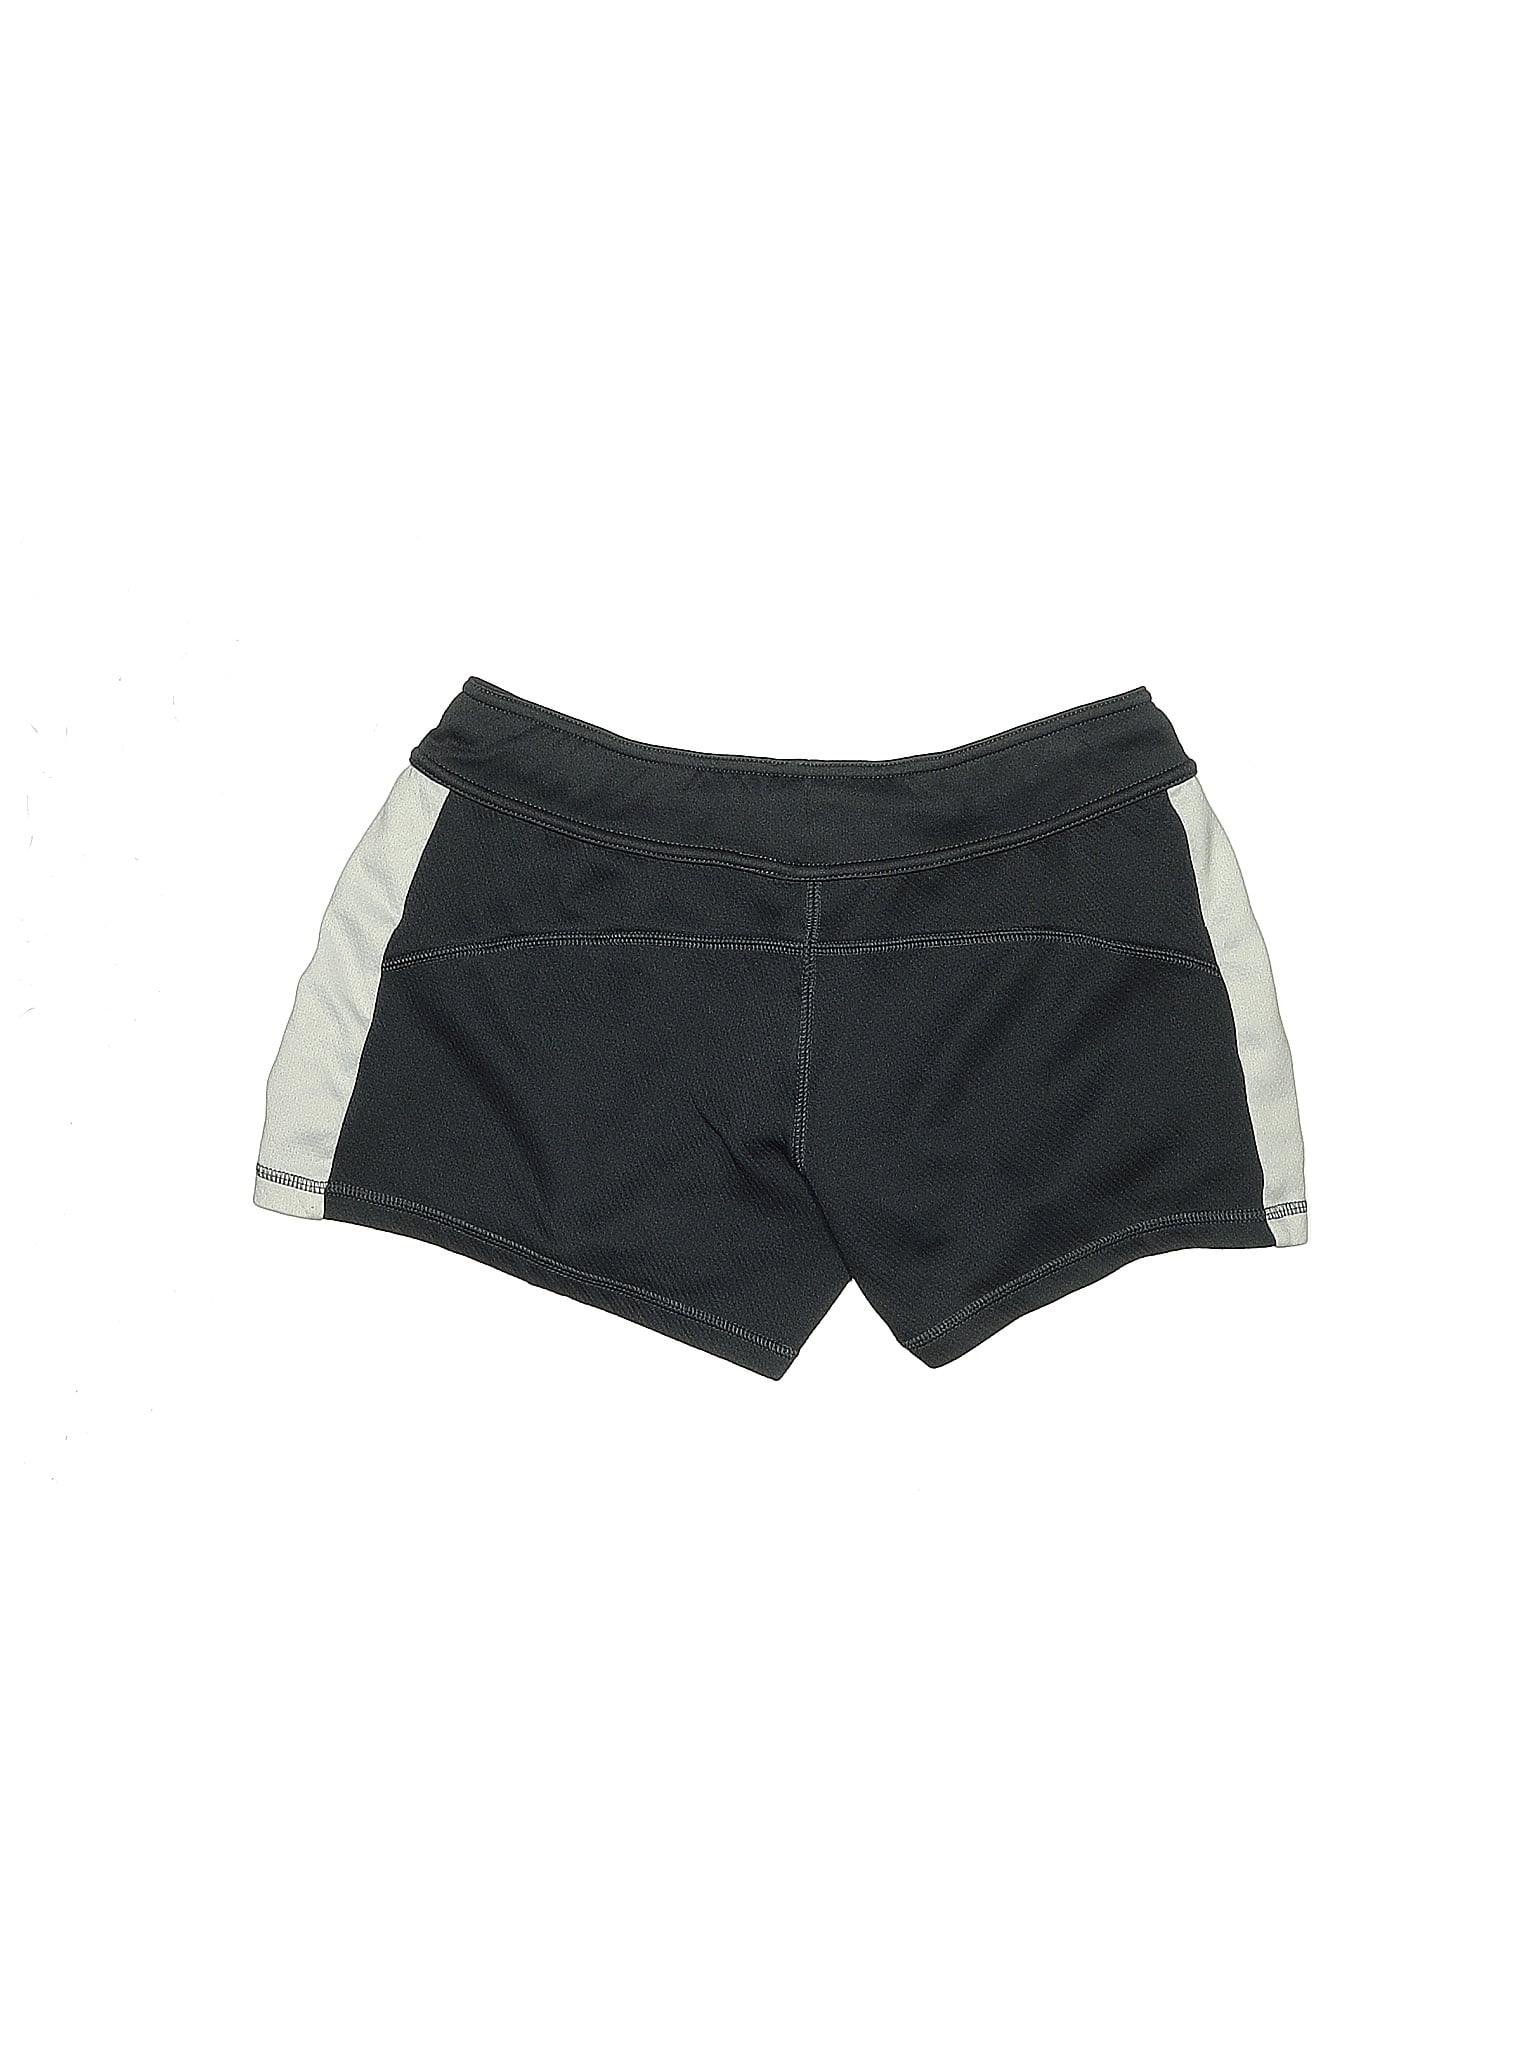 Womens Danskin Now Athletic Shorts - Black/White, Size S (4-6)